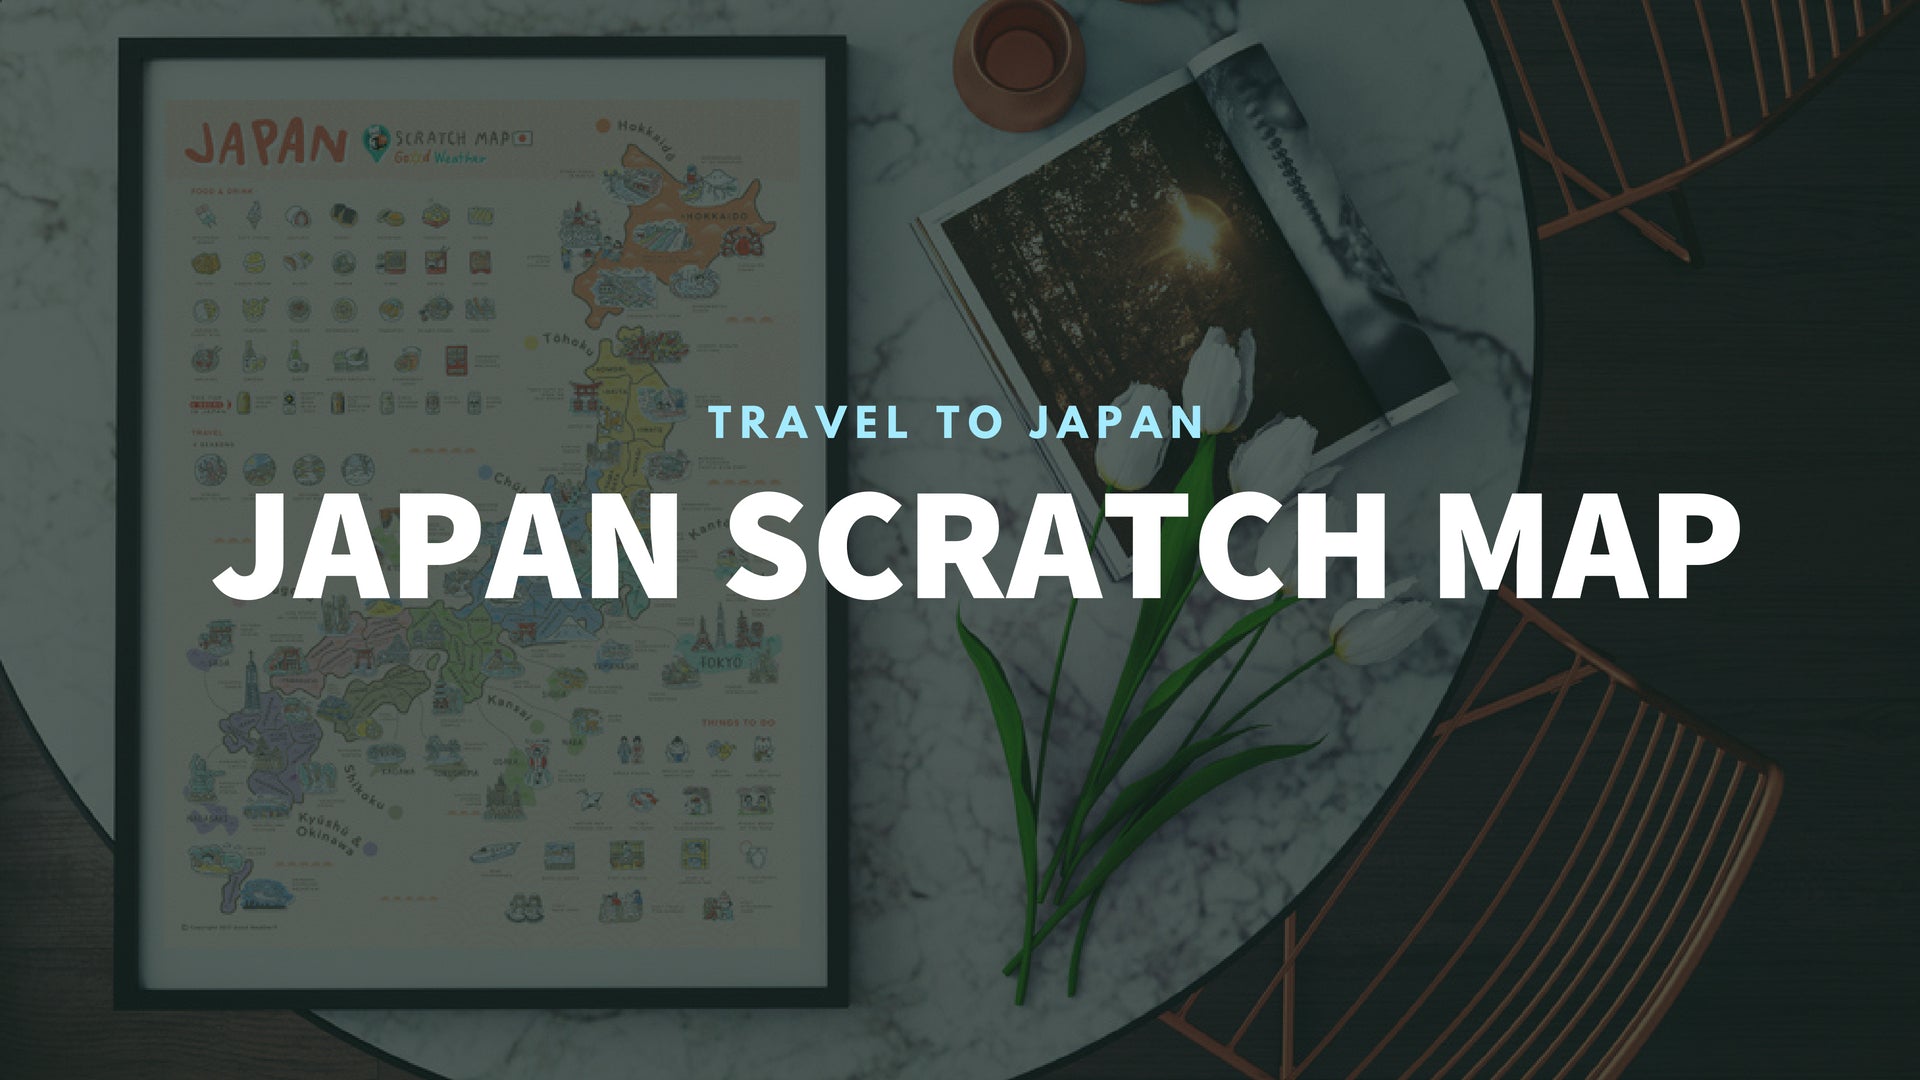 Japan scratch map - iMartCity 刮刮樂